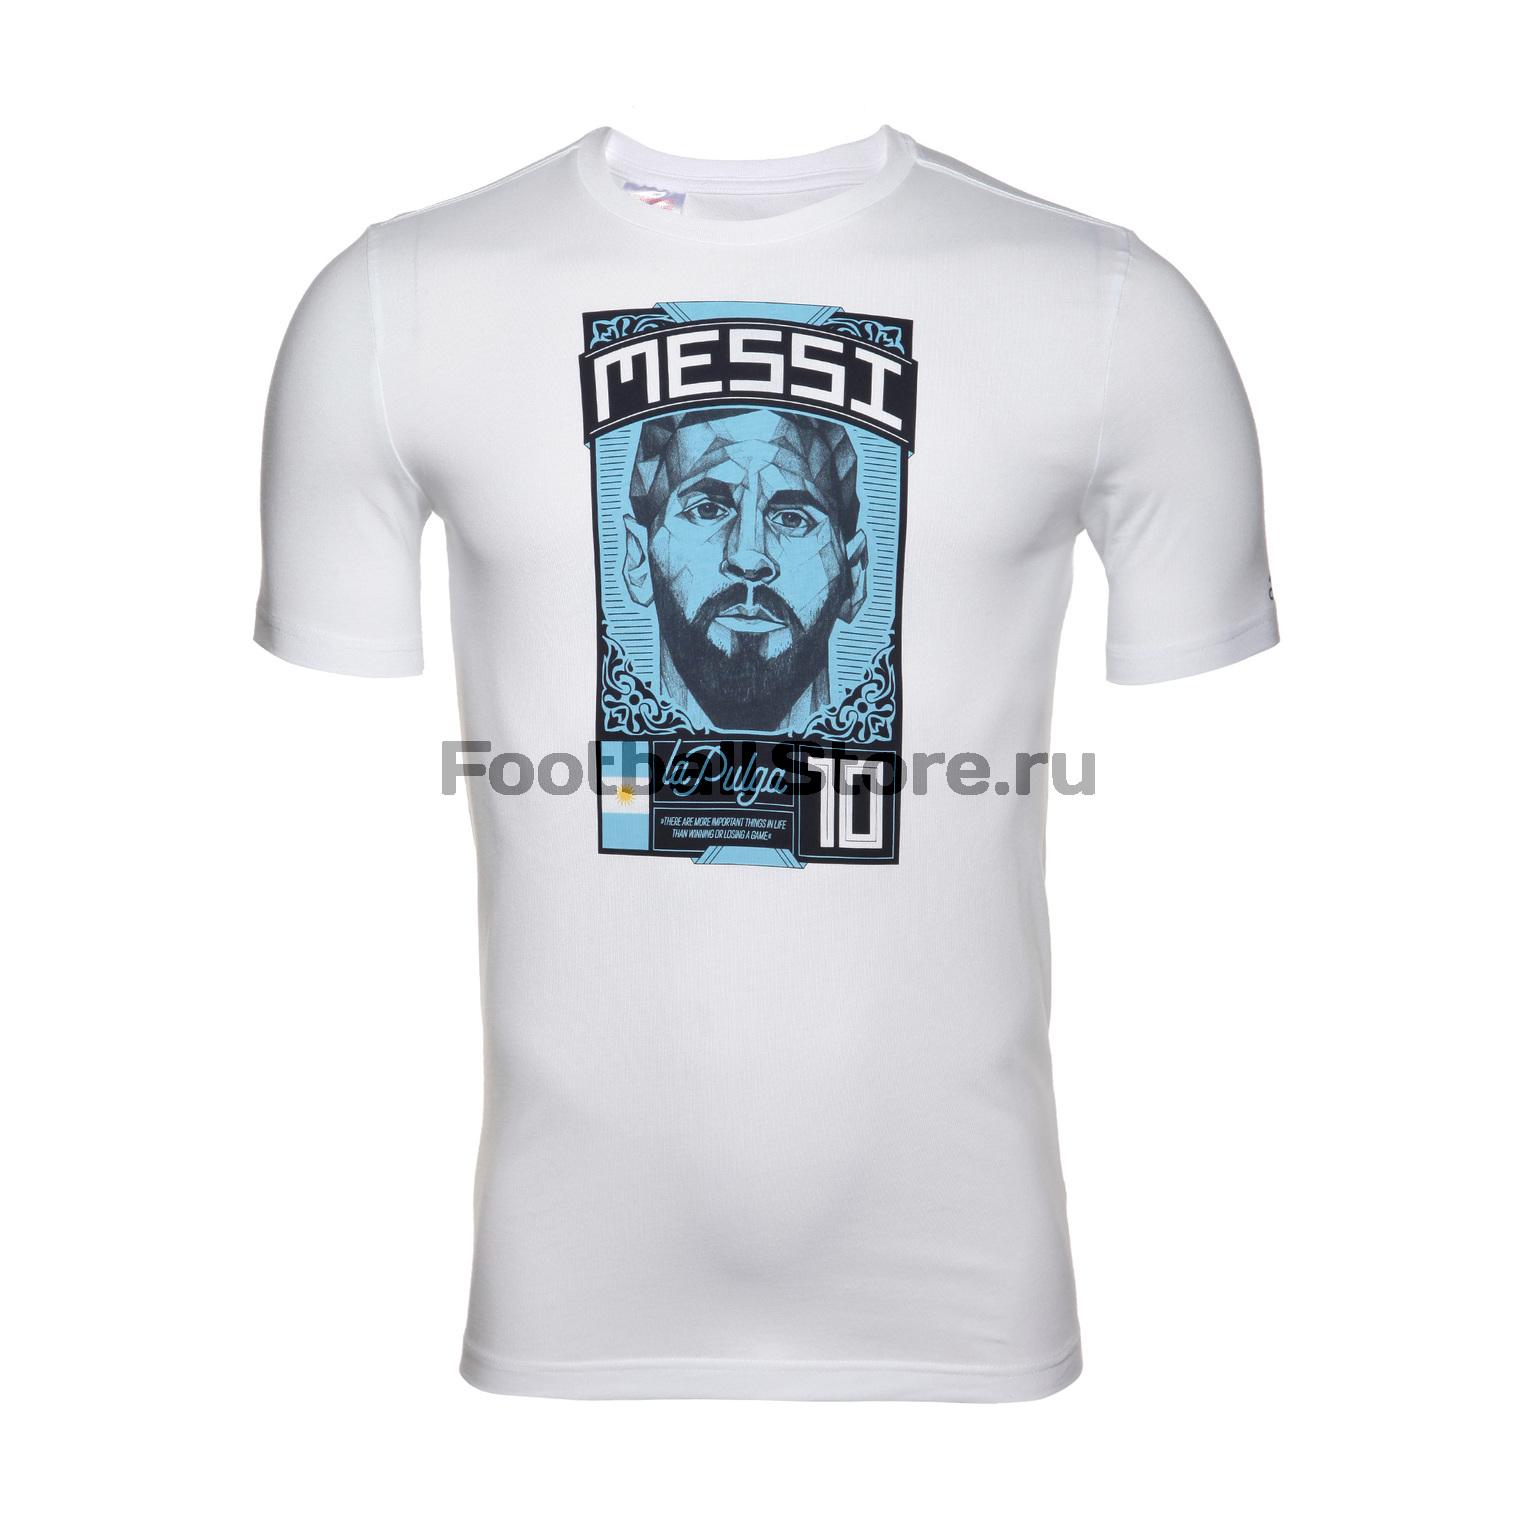 Футболка подростковая Adidas Messi Graphic CW2143